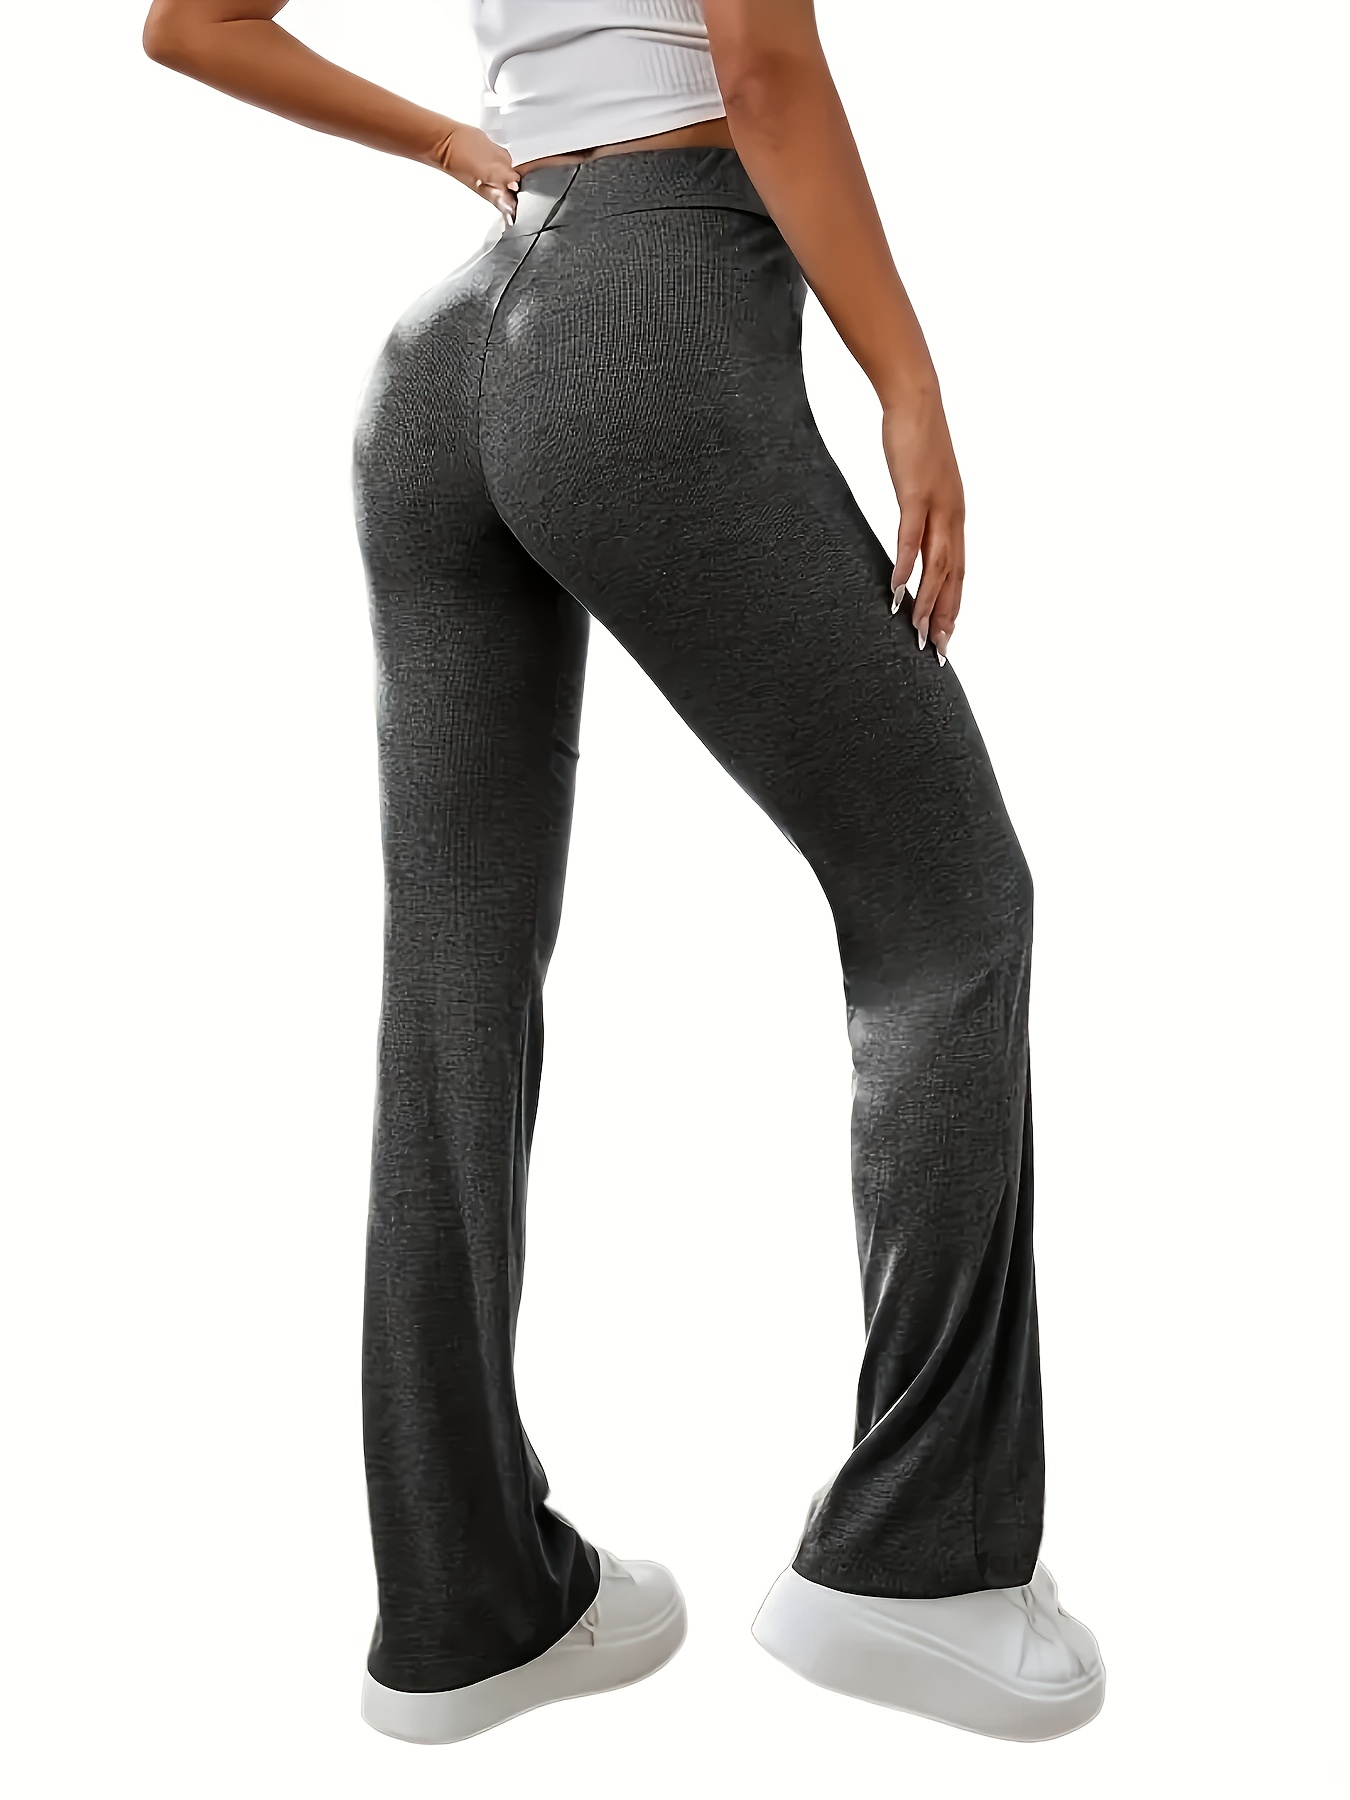 nsendm Unisex Pants Adult Yoga Pants Petite Short with Pockets Workout  Athletic Out Running Yoga Women Pants Sports Yoga Pants Flare Cotton(Black,  XS) 